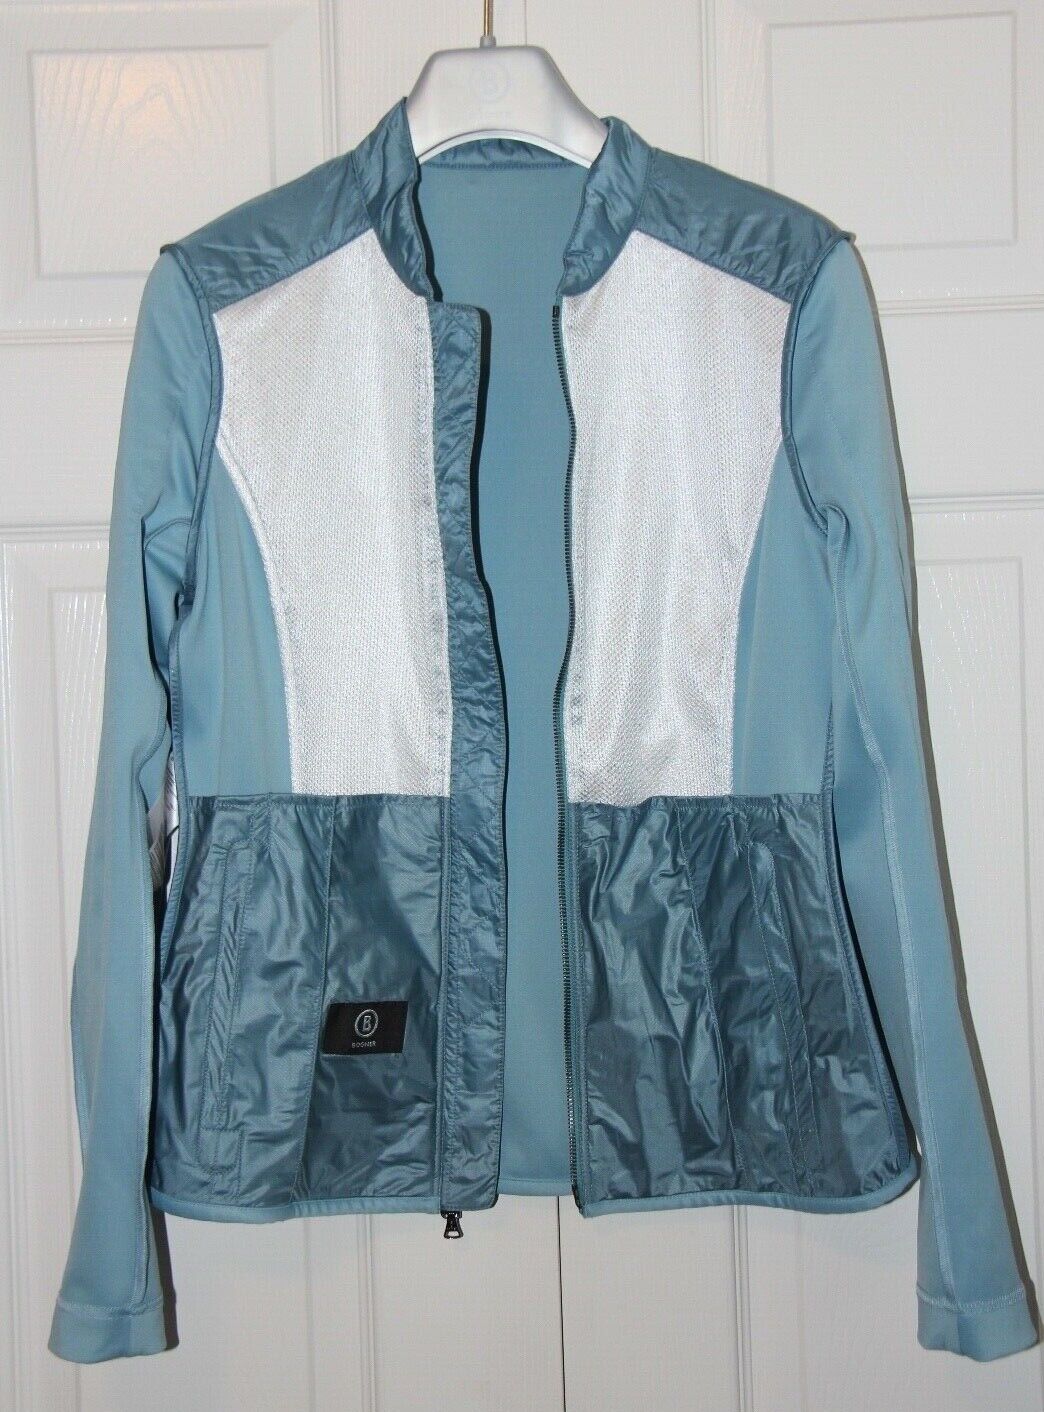 Bogner Mella Jacket Women's - Size 40 US 10 ML (Medium Large) - Slate Blue - NEW Bogner - фотография #11